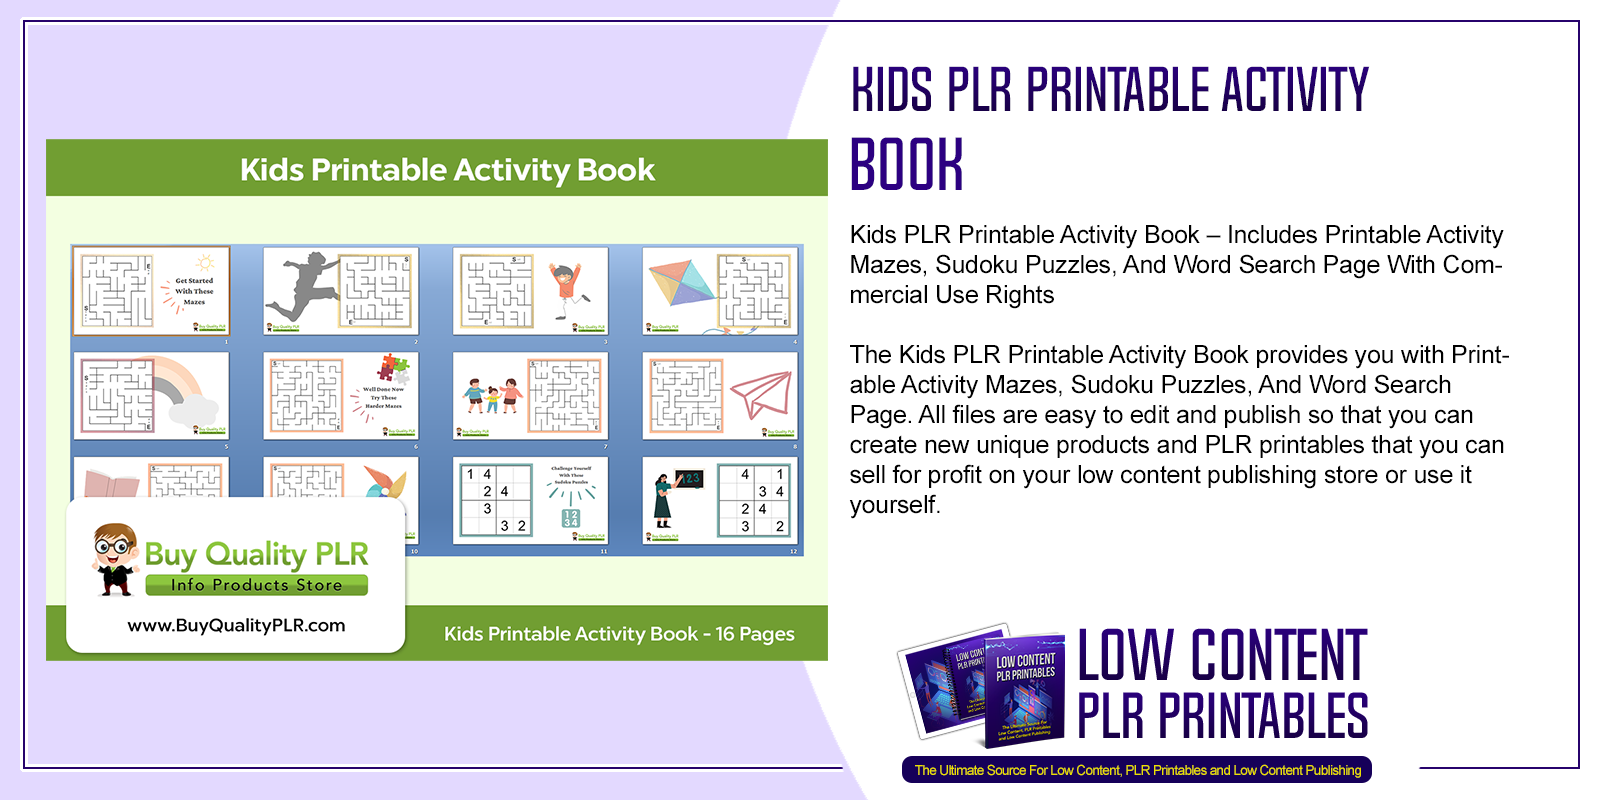 Kids PLR Printable Activity Book